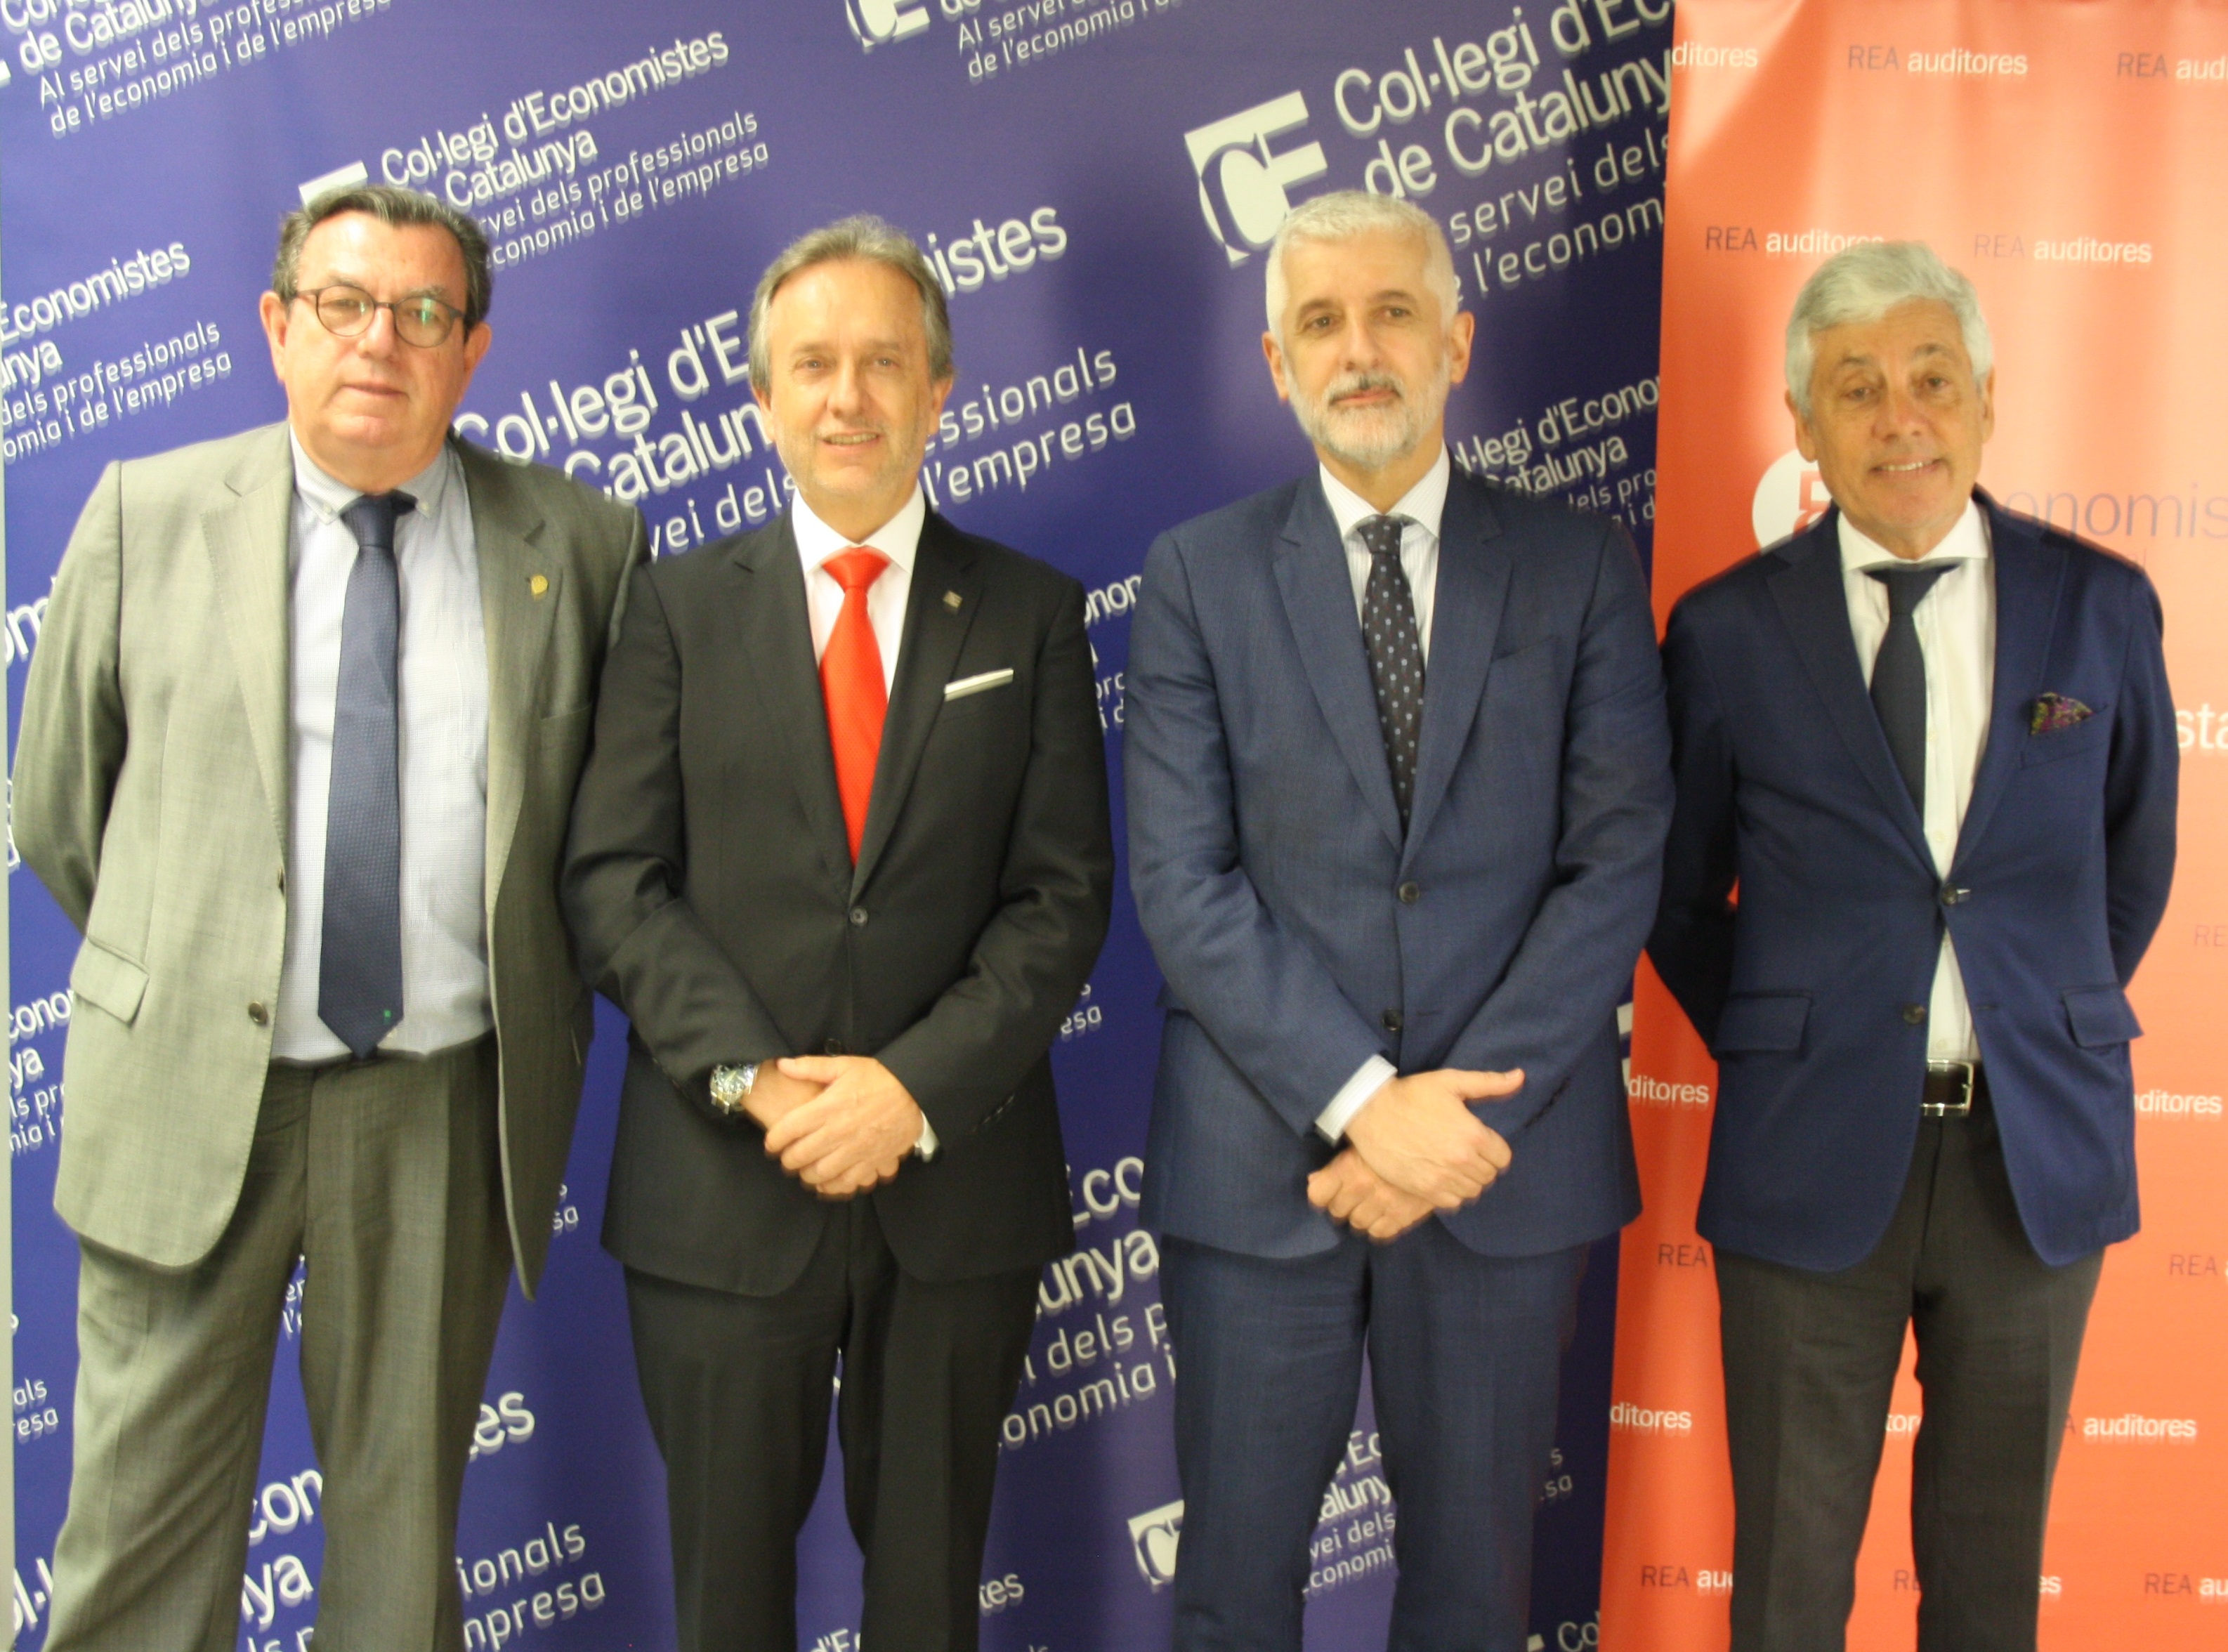 Miquel Salazar, Carles Puig de Travy, Valentí Pich i Emilio Álvarez, en l'acte del Col·legi d'Economistes. 